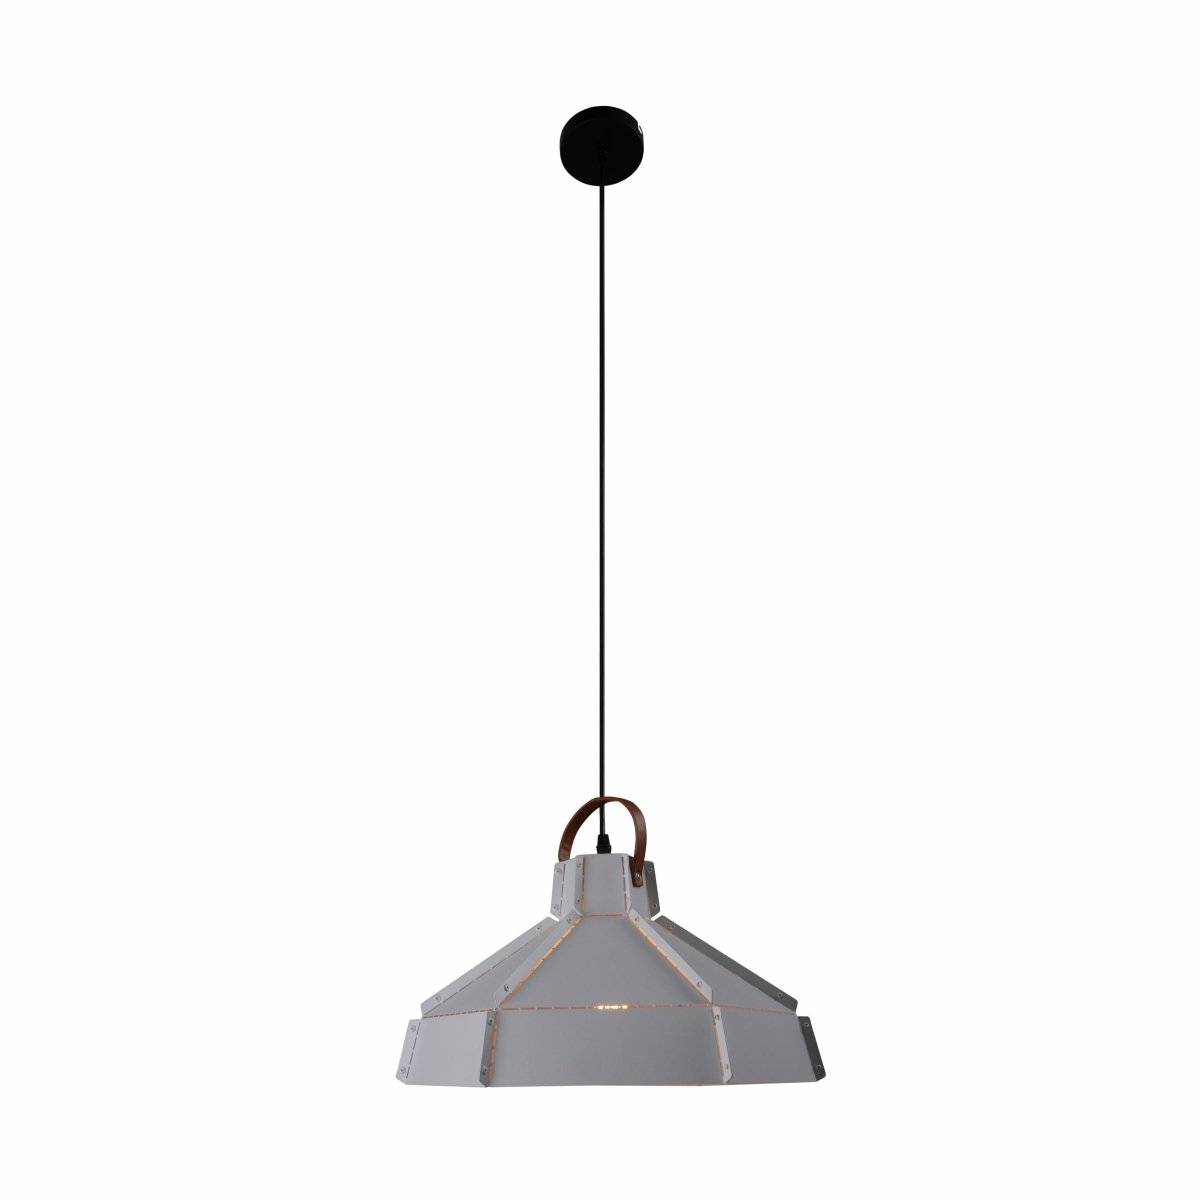 Main image of Esagono Maxi White Metal Pendant Light with E27 Fitting | TEKLED 159-17354